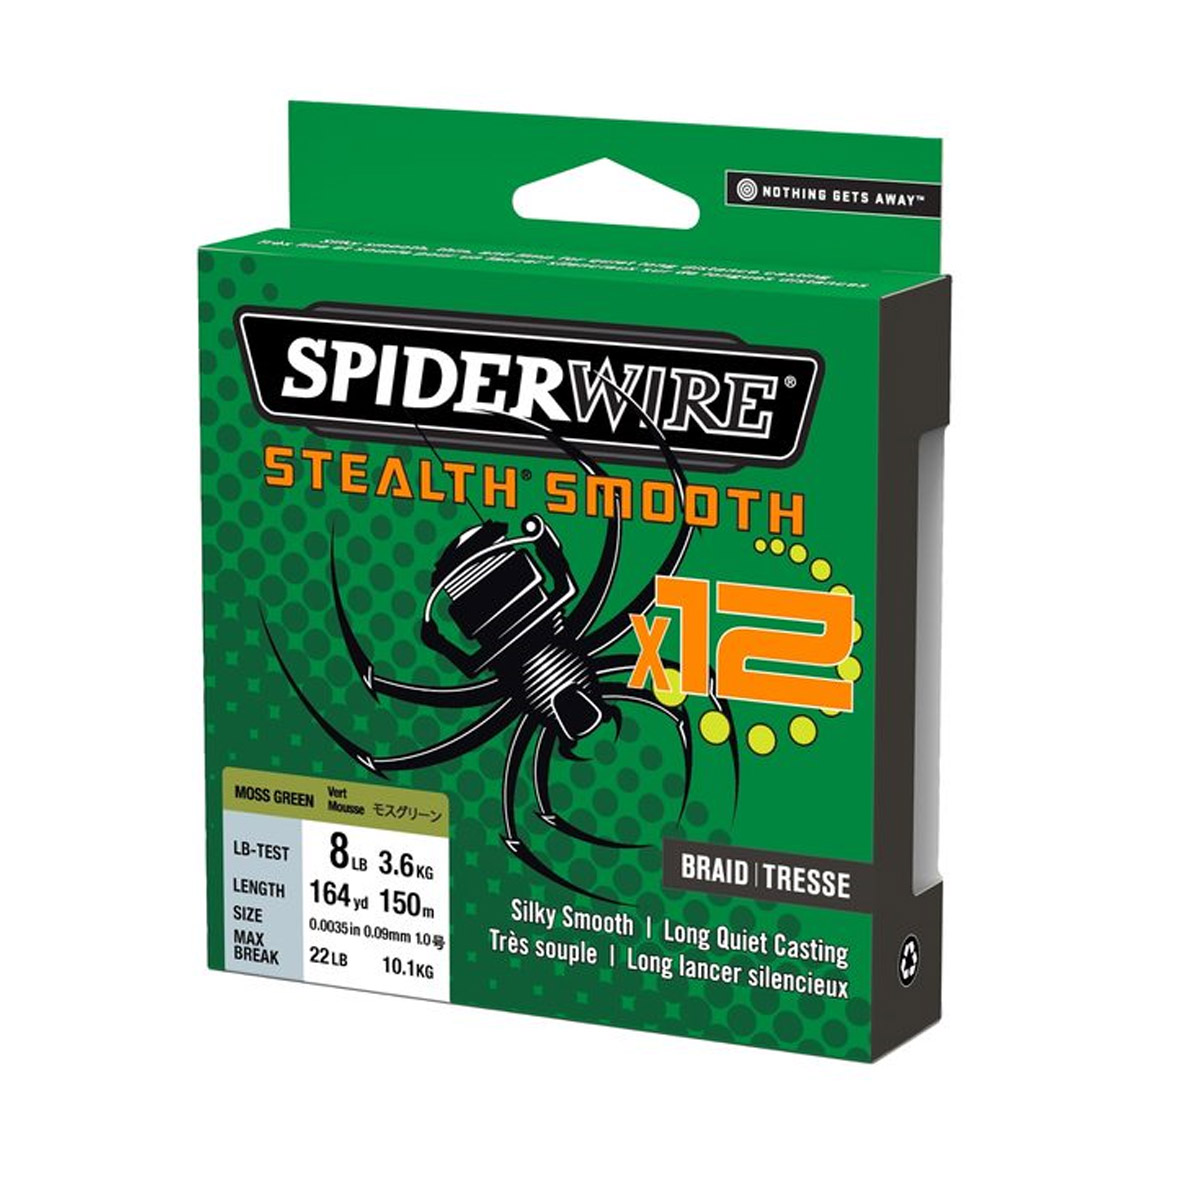 SpiderWire Stealth® Smooth 12 Braid Moss Green 150 M